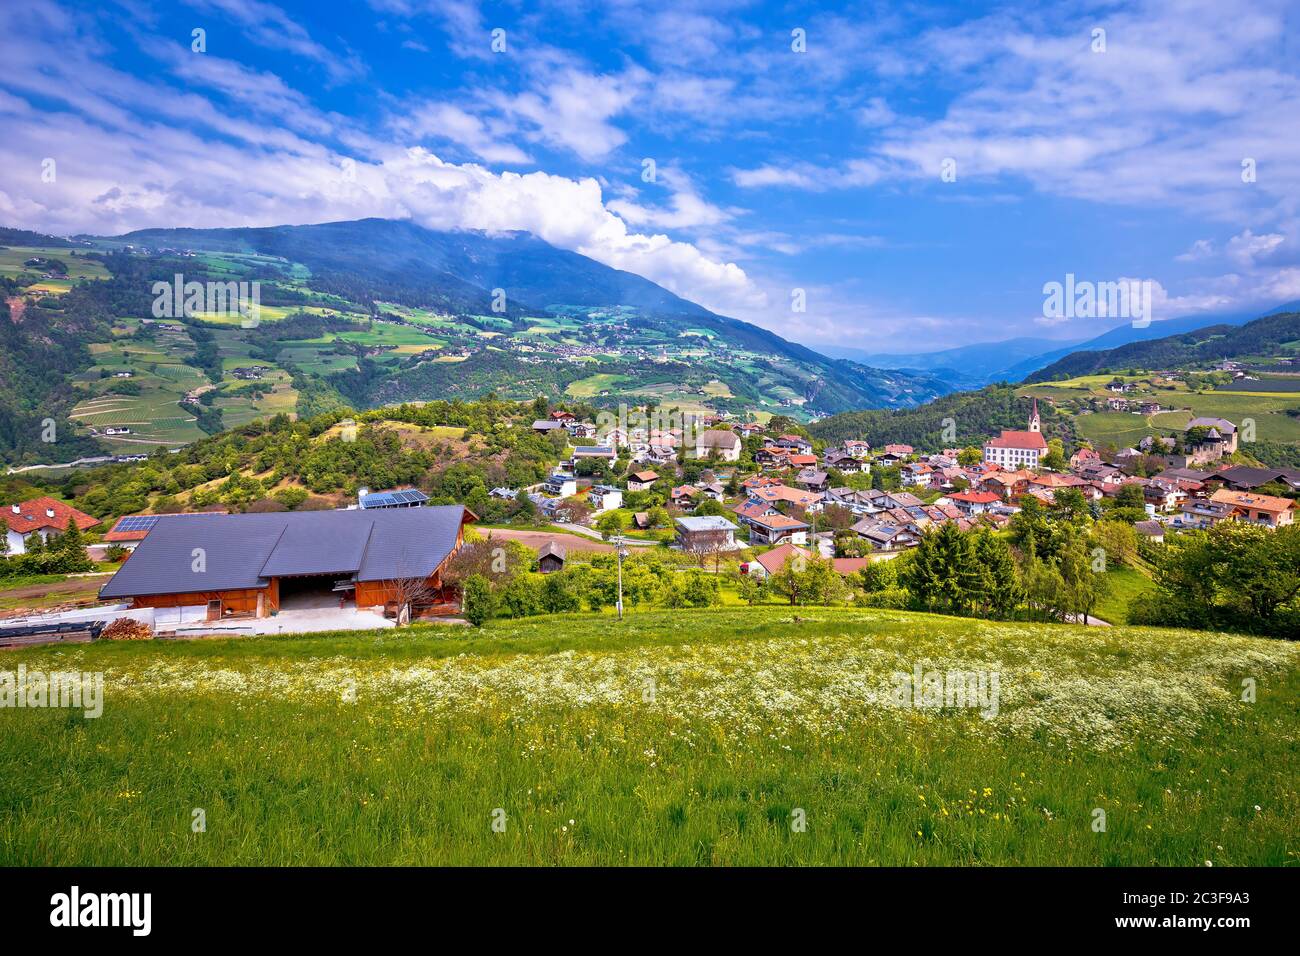 Dolomites. Idyllic alpine village of Gudon architecture and landscape view Stock Photo